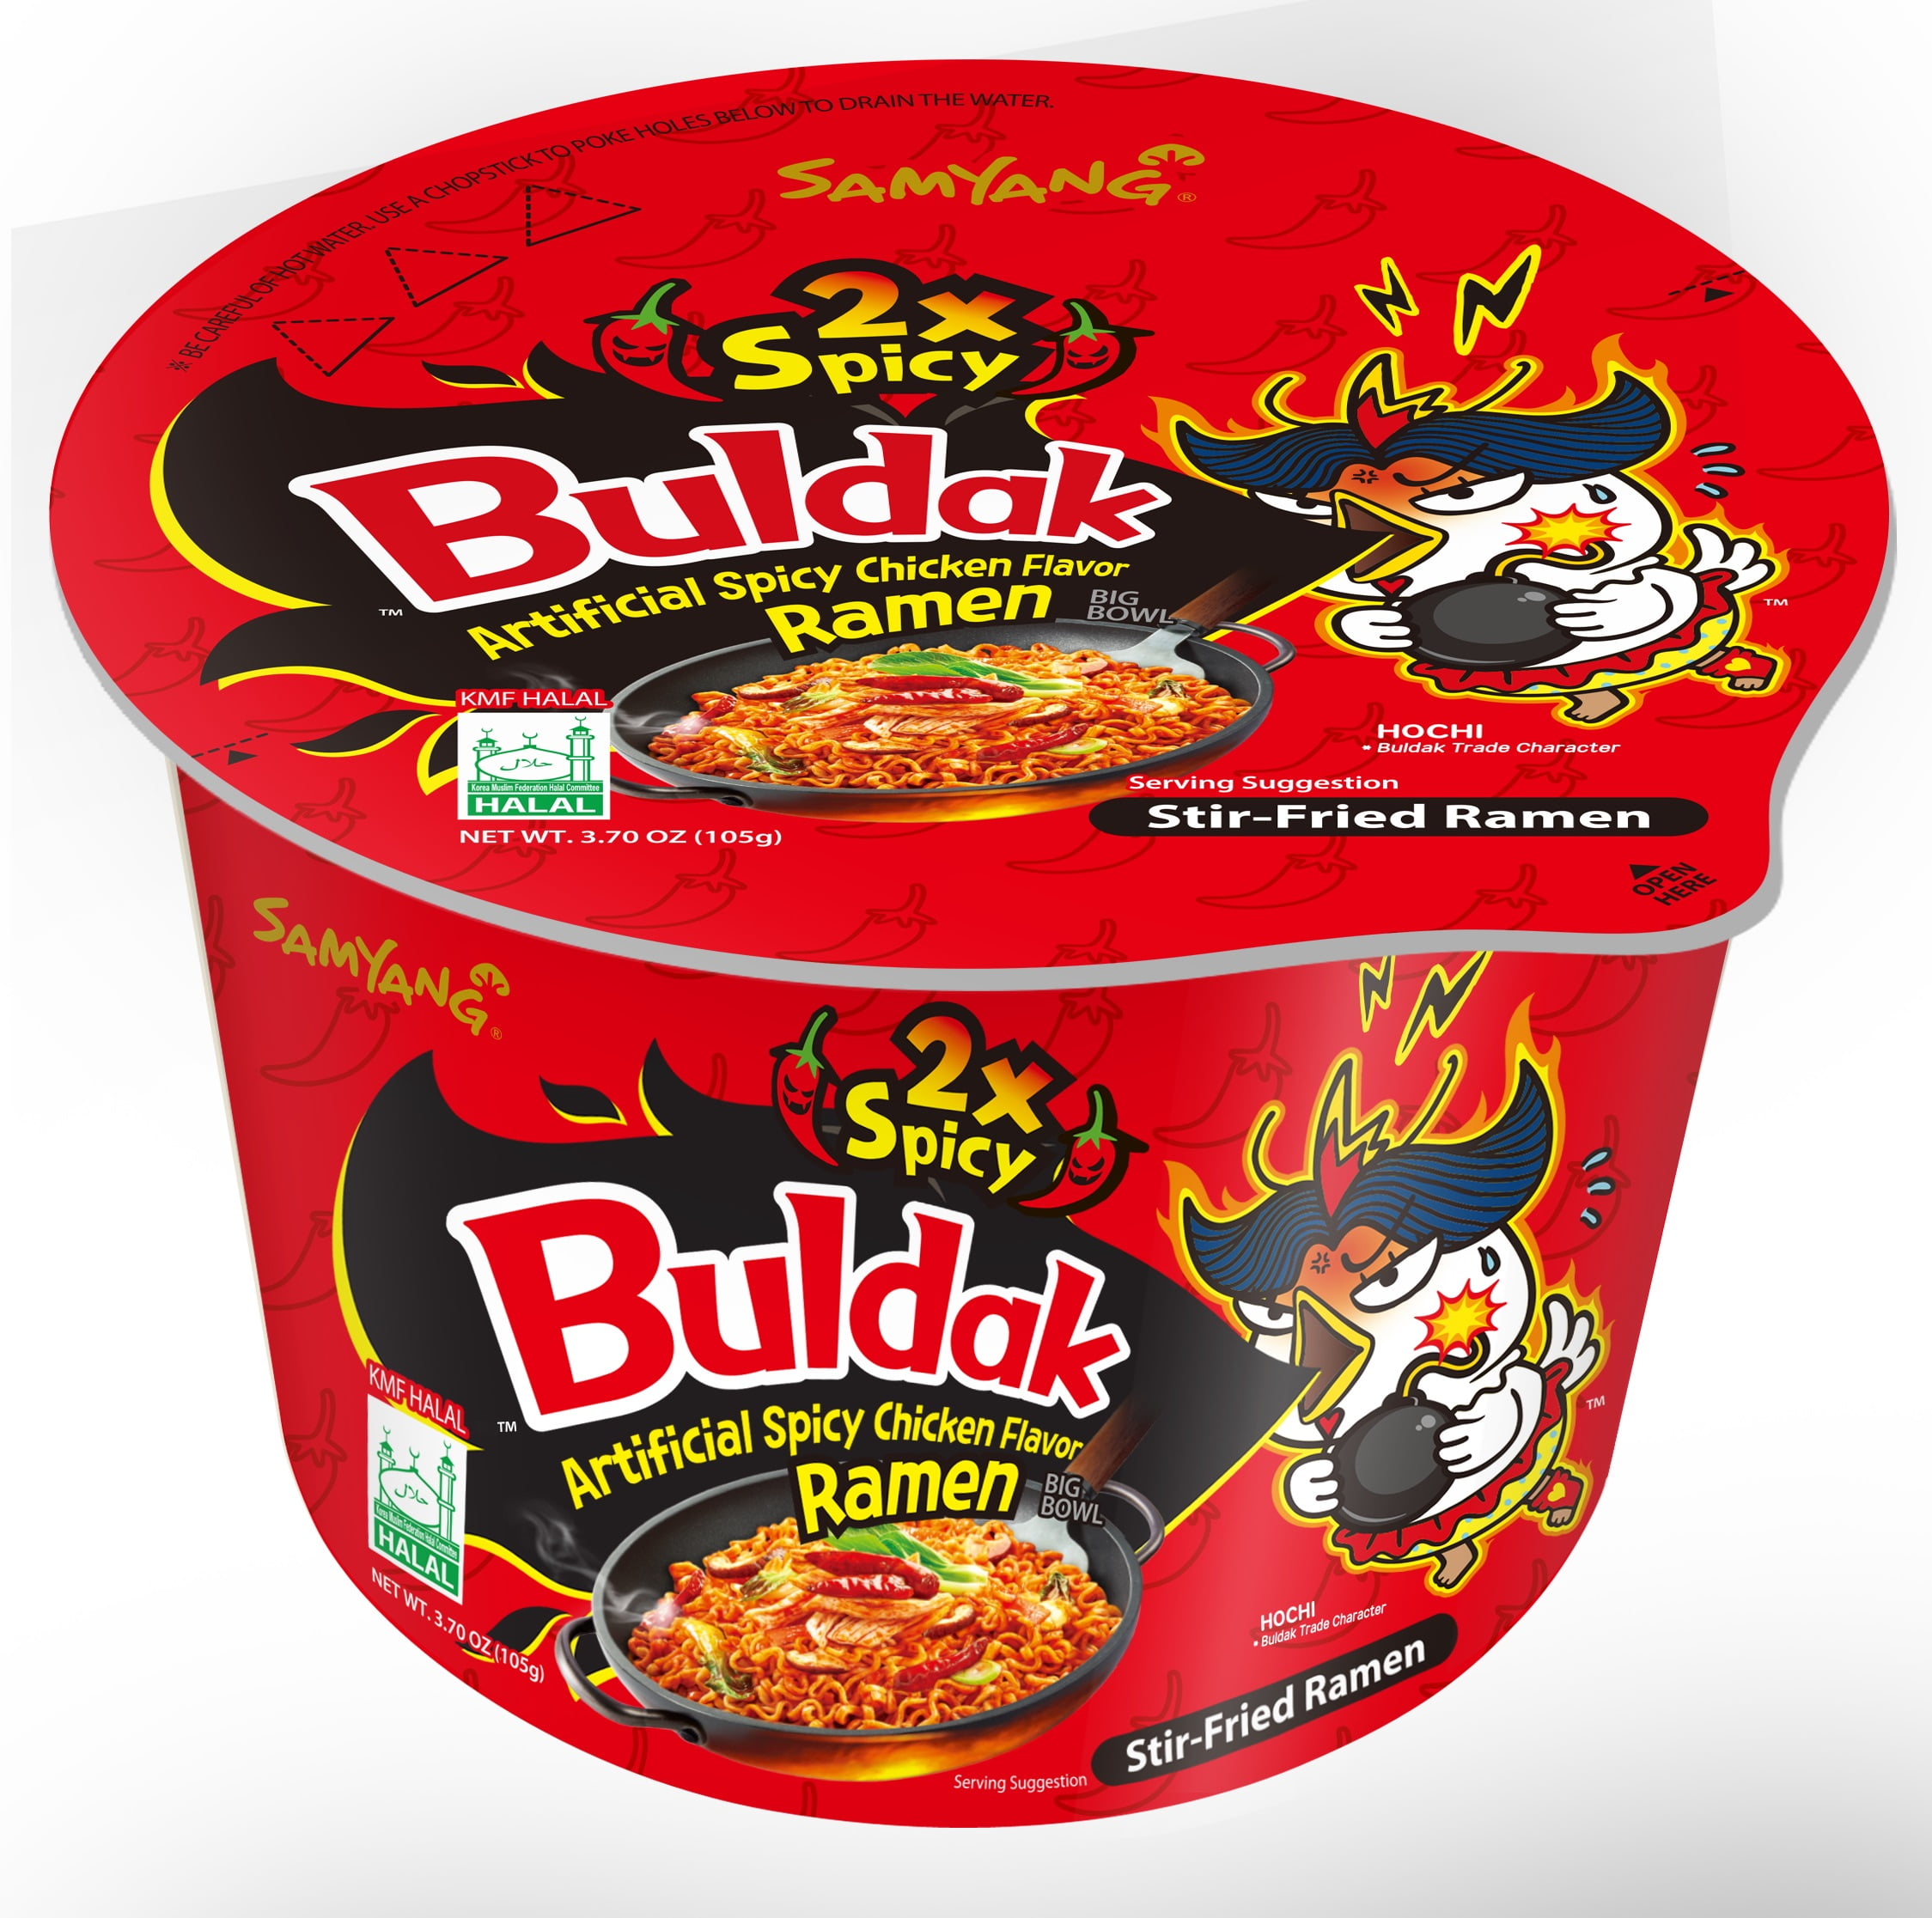 Samyang Buldak 2X Spicy Hot Chicken Flavor Instant Ramen, 3.7 oz, Big Bowl  